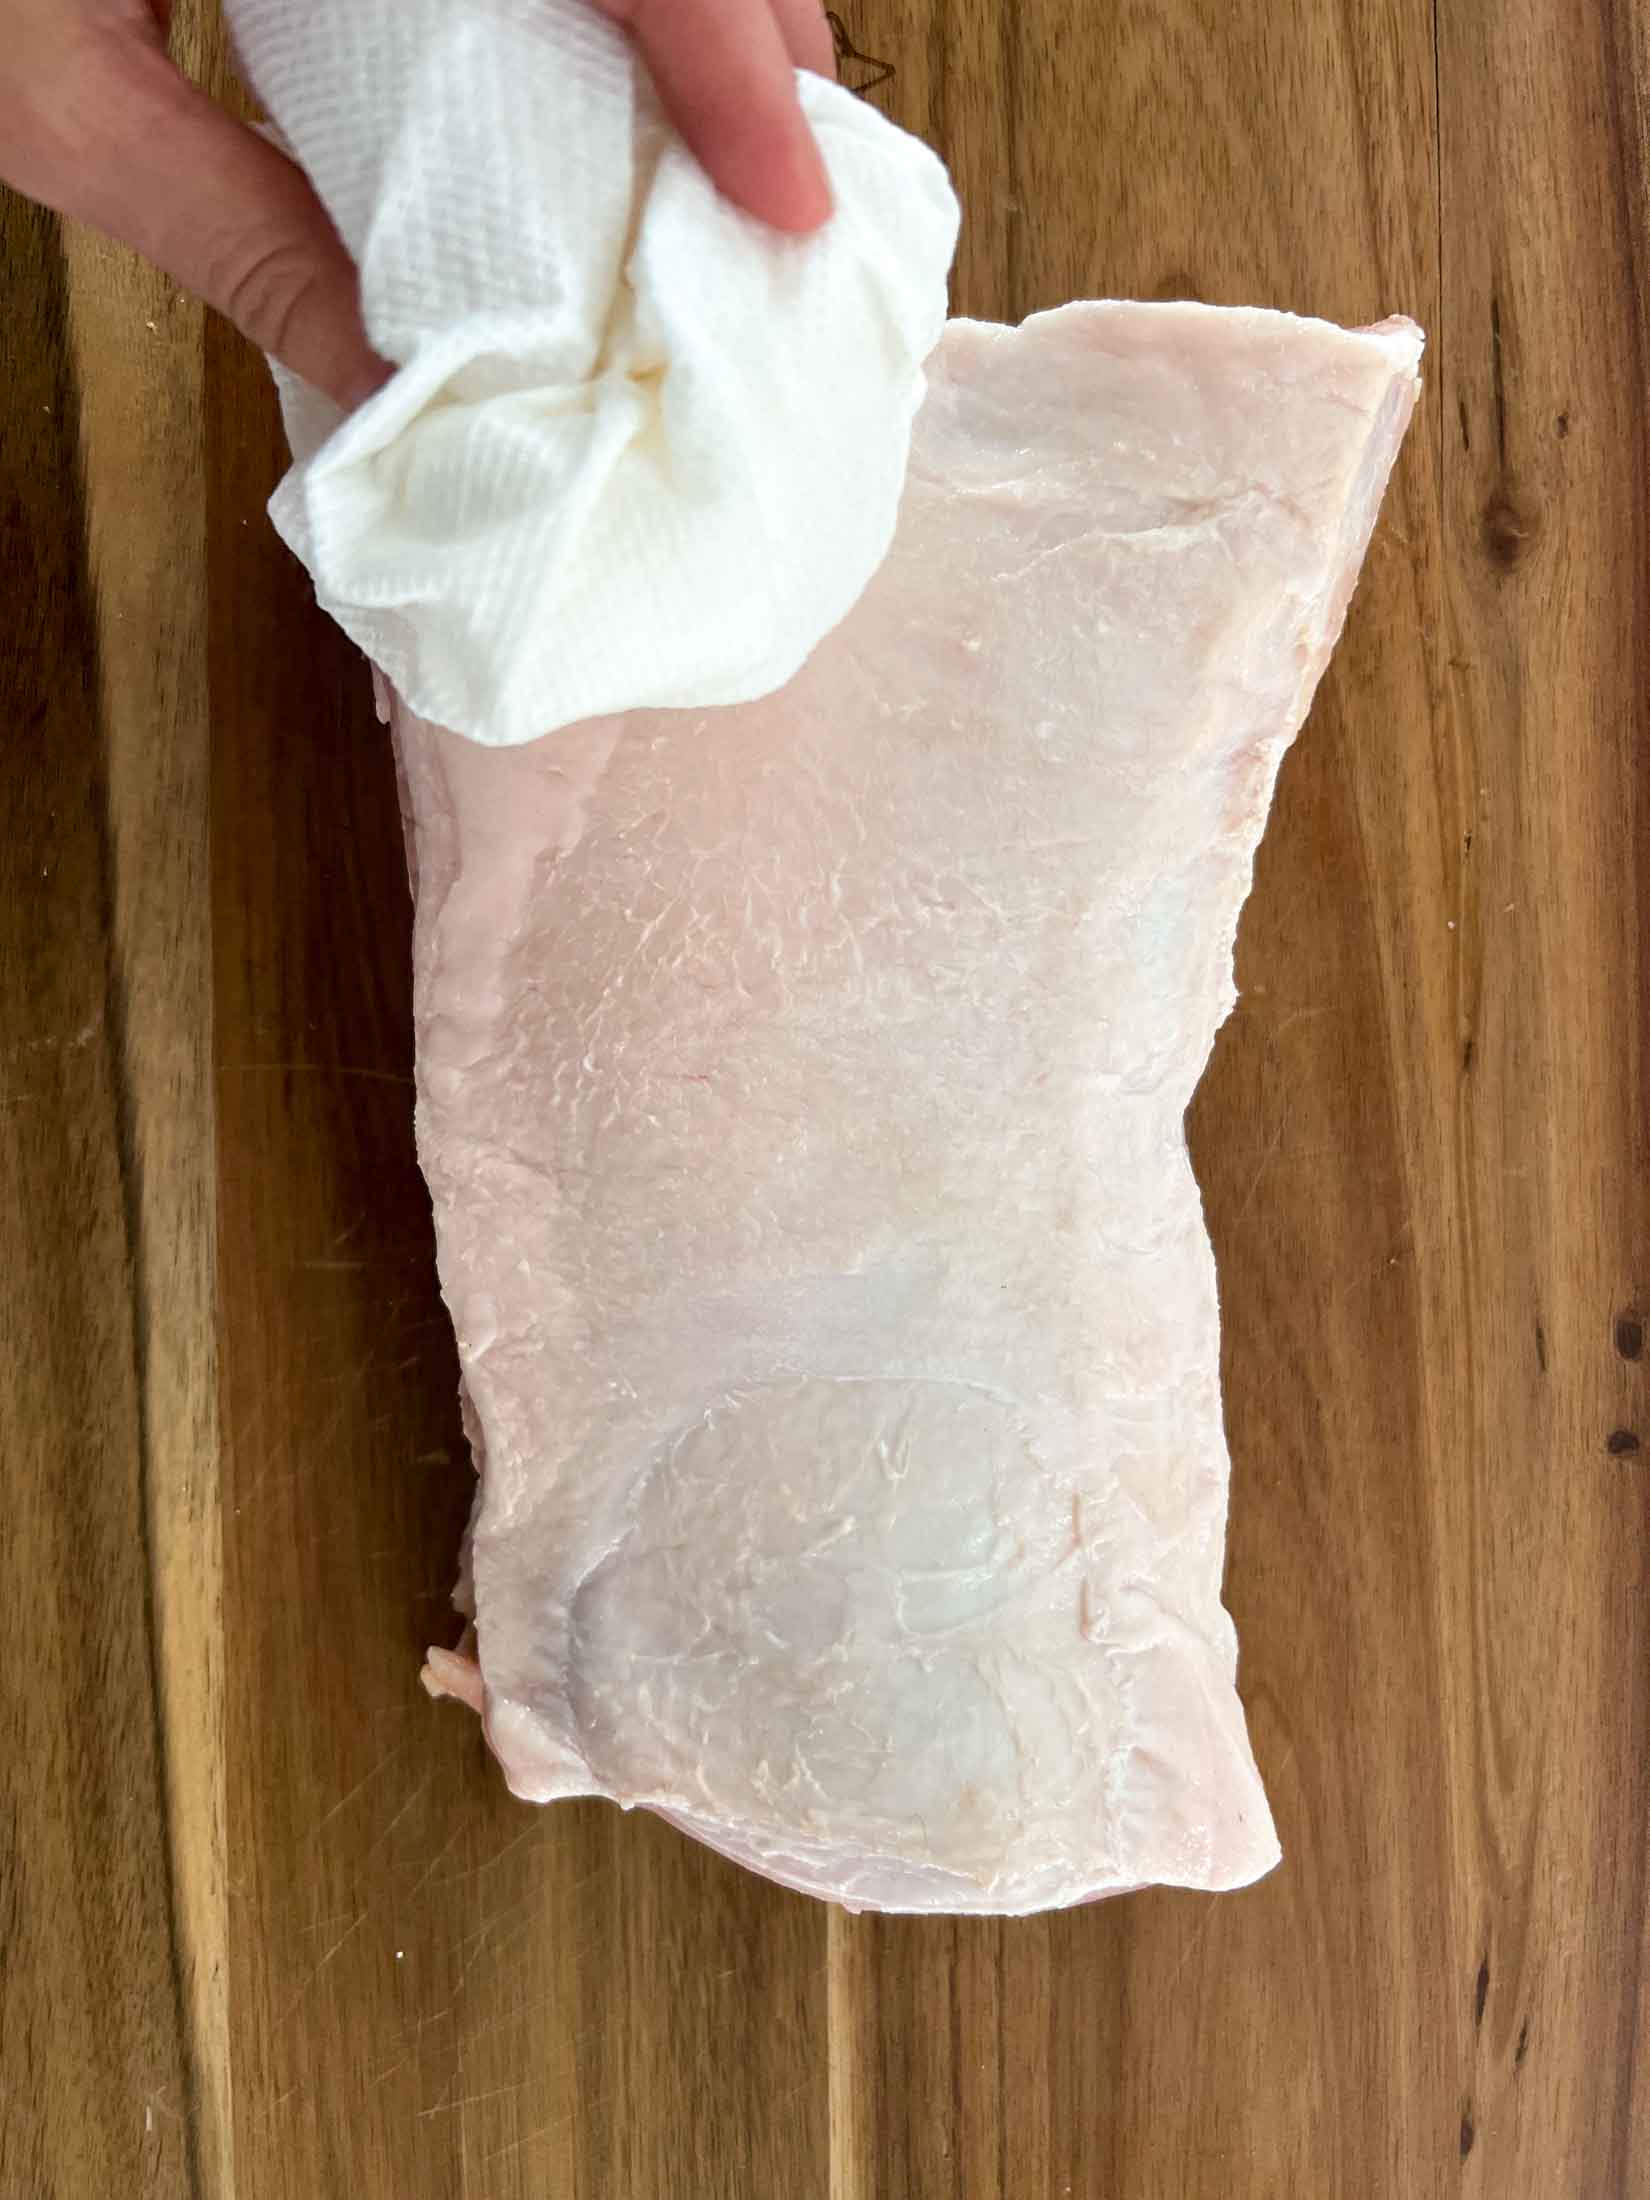 Paper towel patting a pork loin roast dry before smoking.